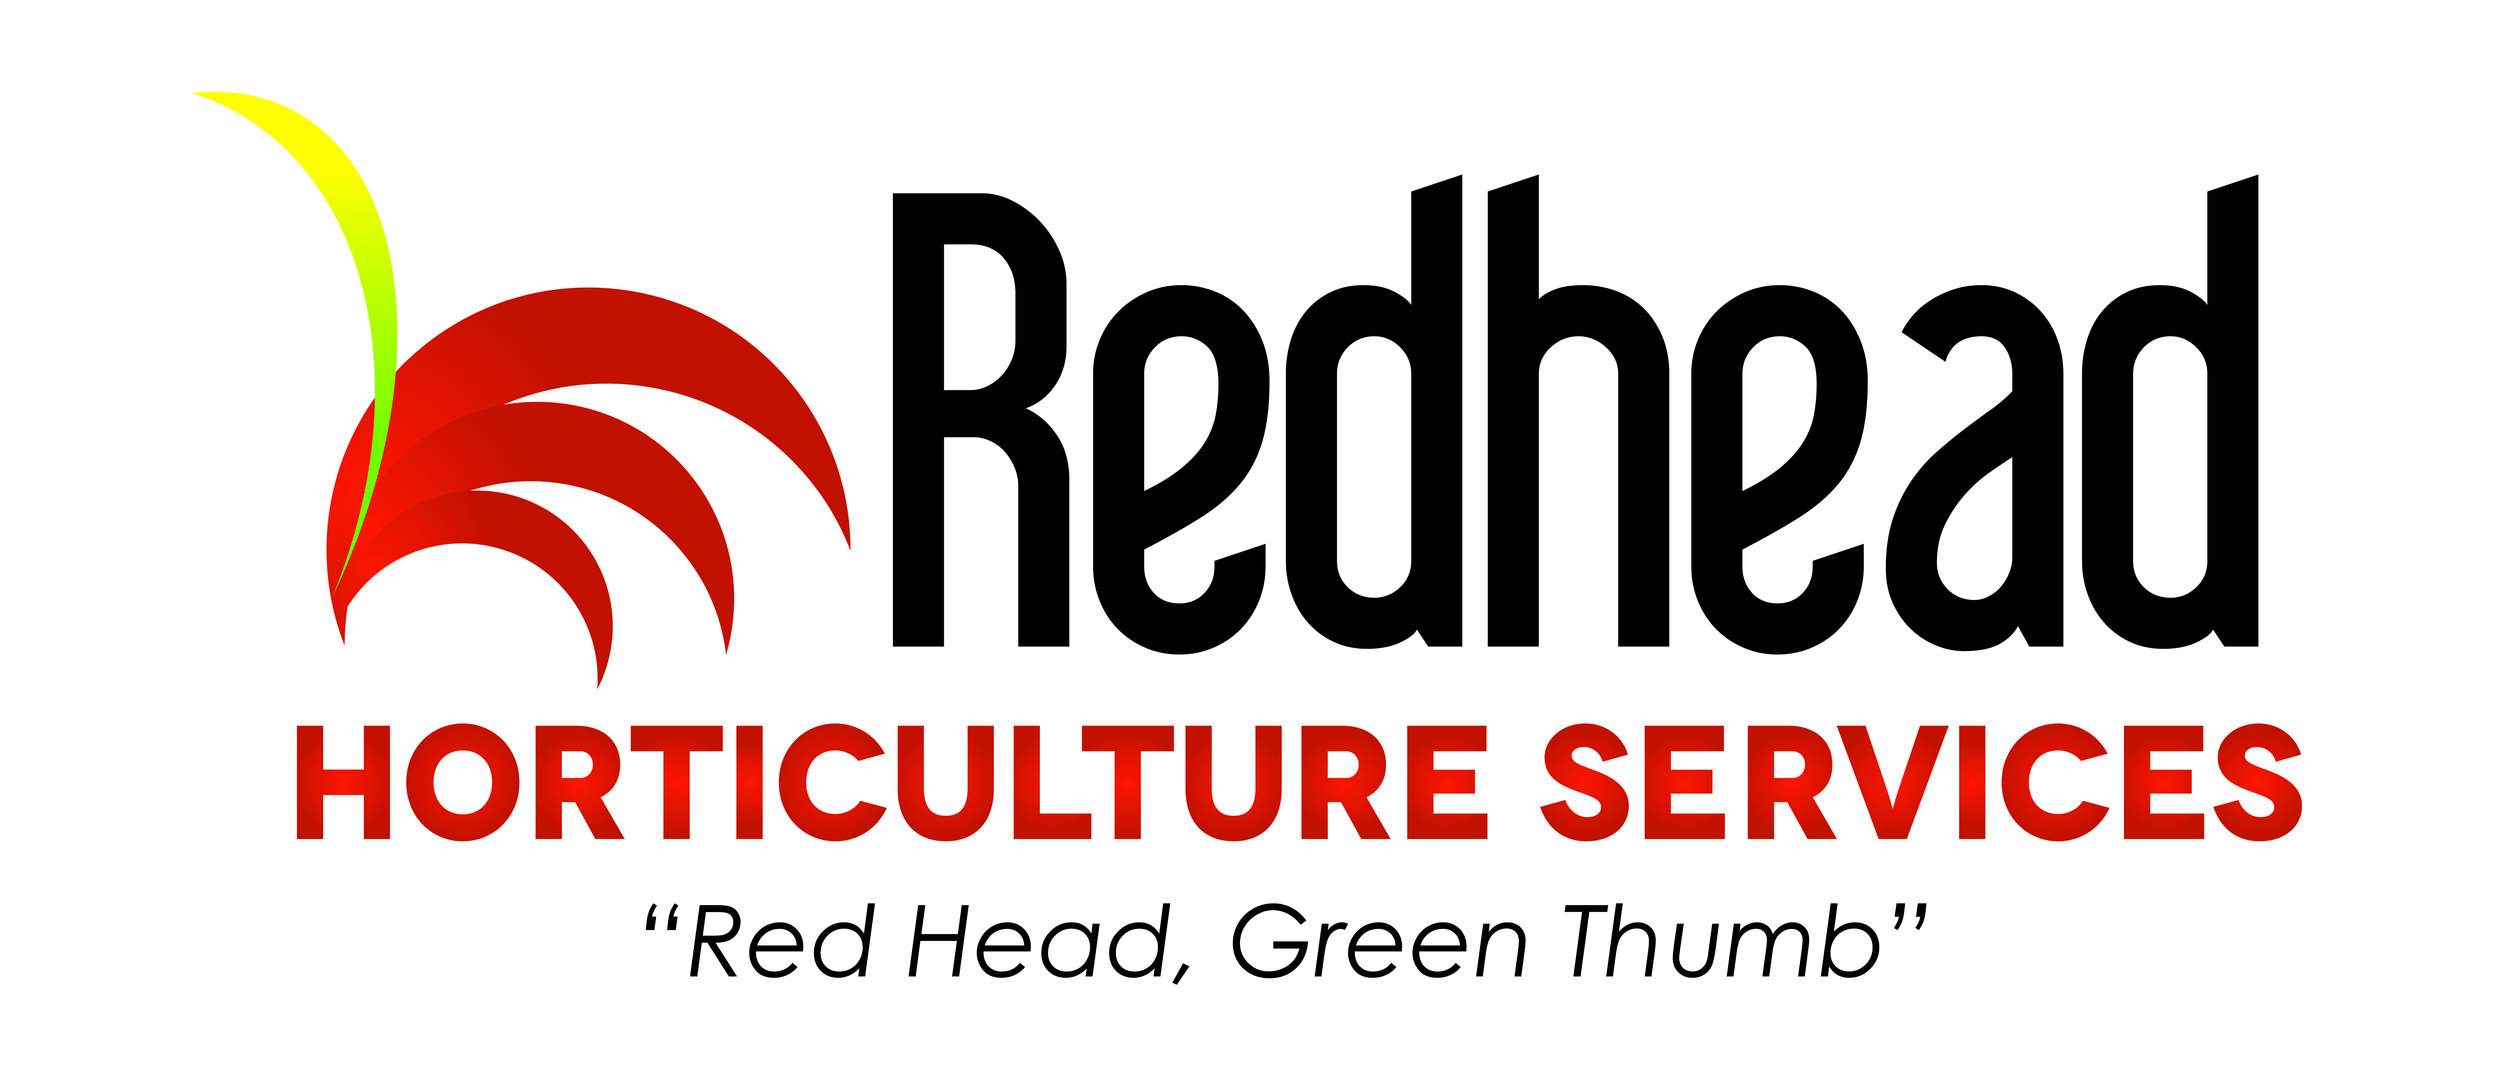 Red Head Logo.jpg